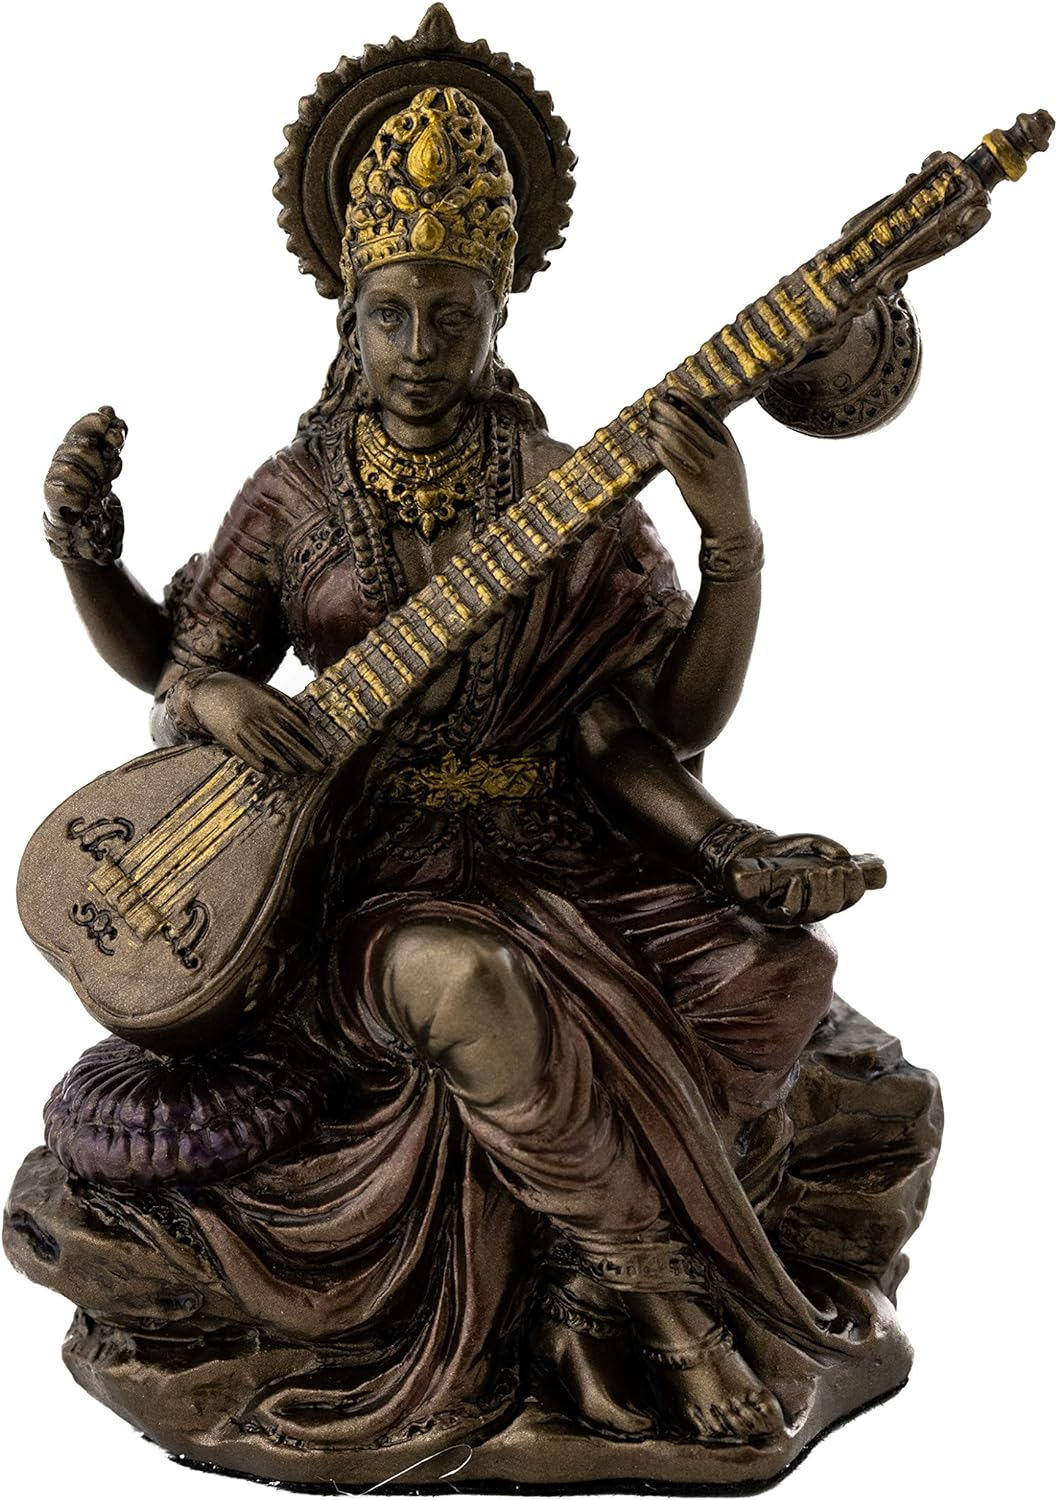 Mini Saraswati Statue - Hindu Goddess of Knowledge, Music, Arts, and Wisdom Scul